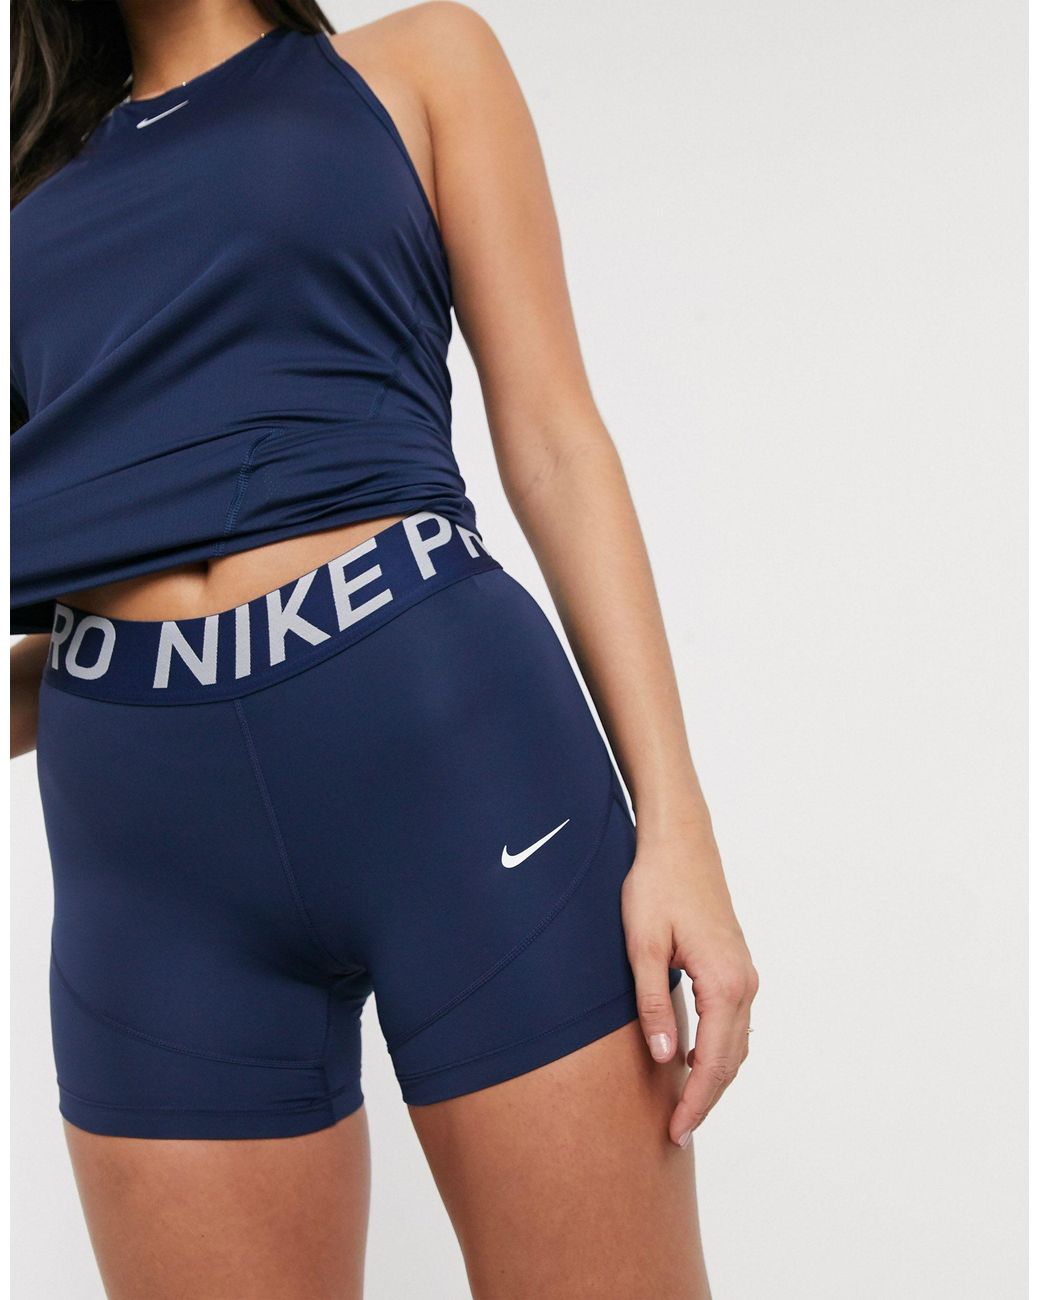 Nike Nike Pro Training 5 Inch Shorts in Navy (Blue) | Lyst Canada